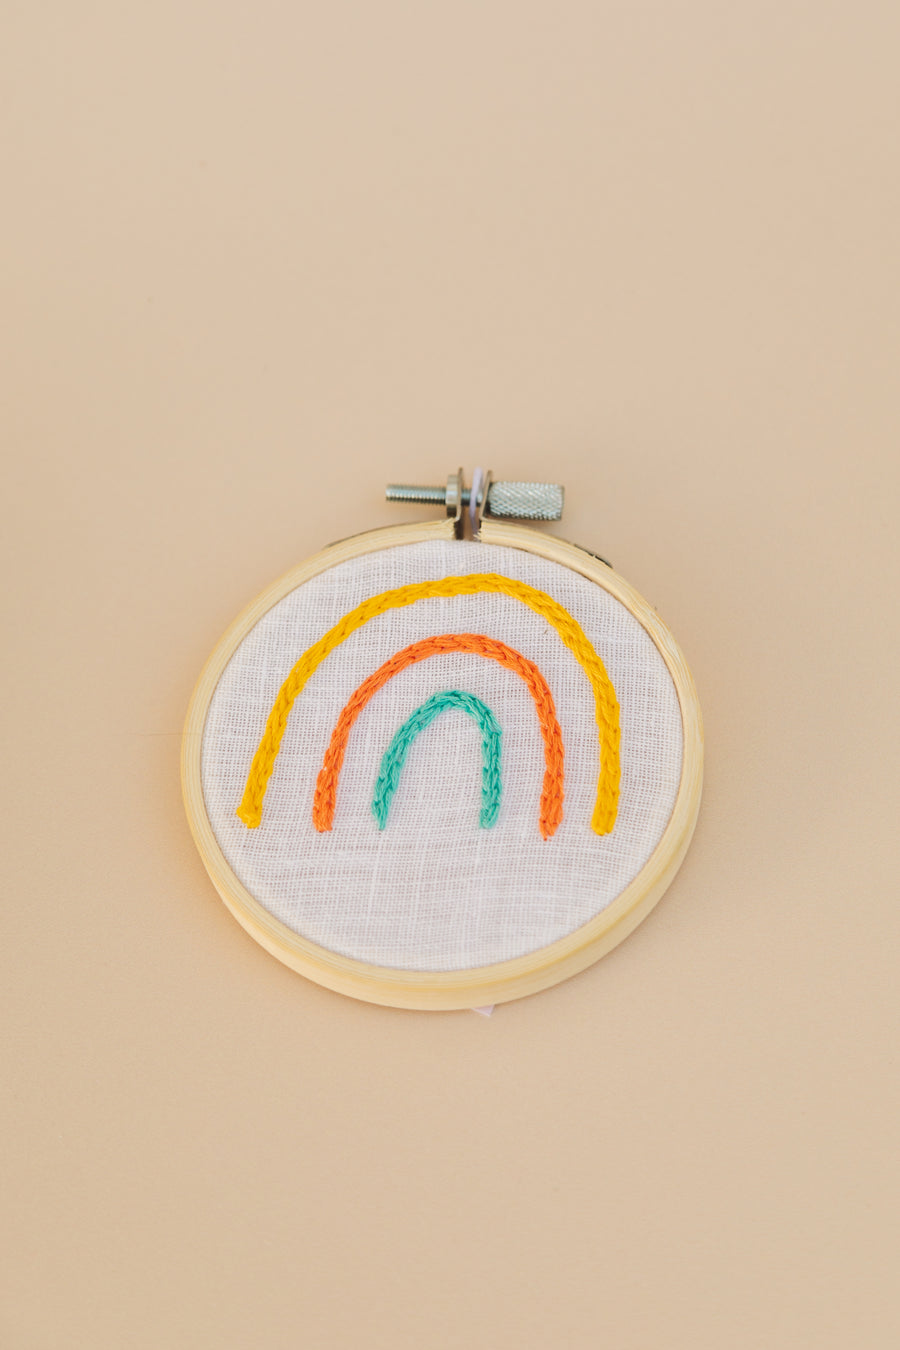 Rainbow Embroidery Hoop